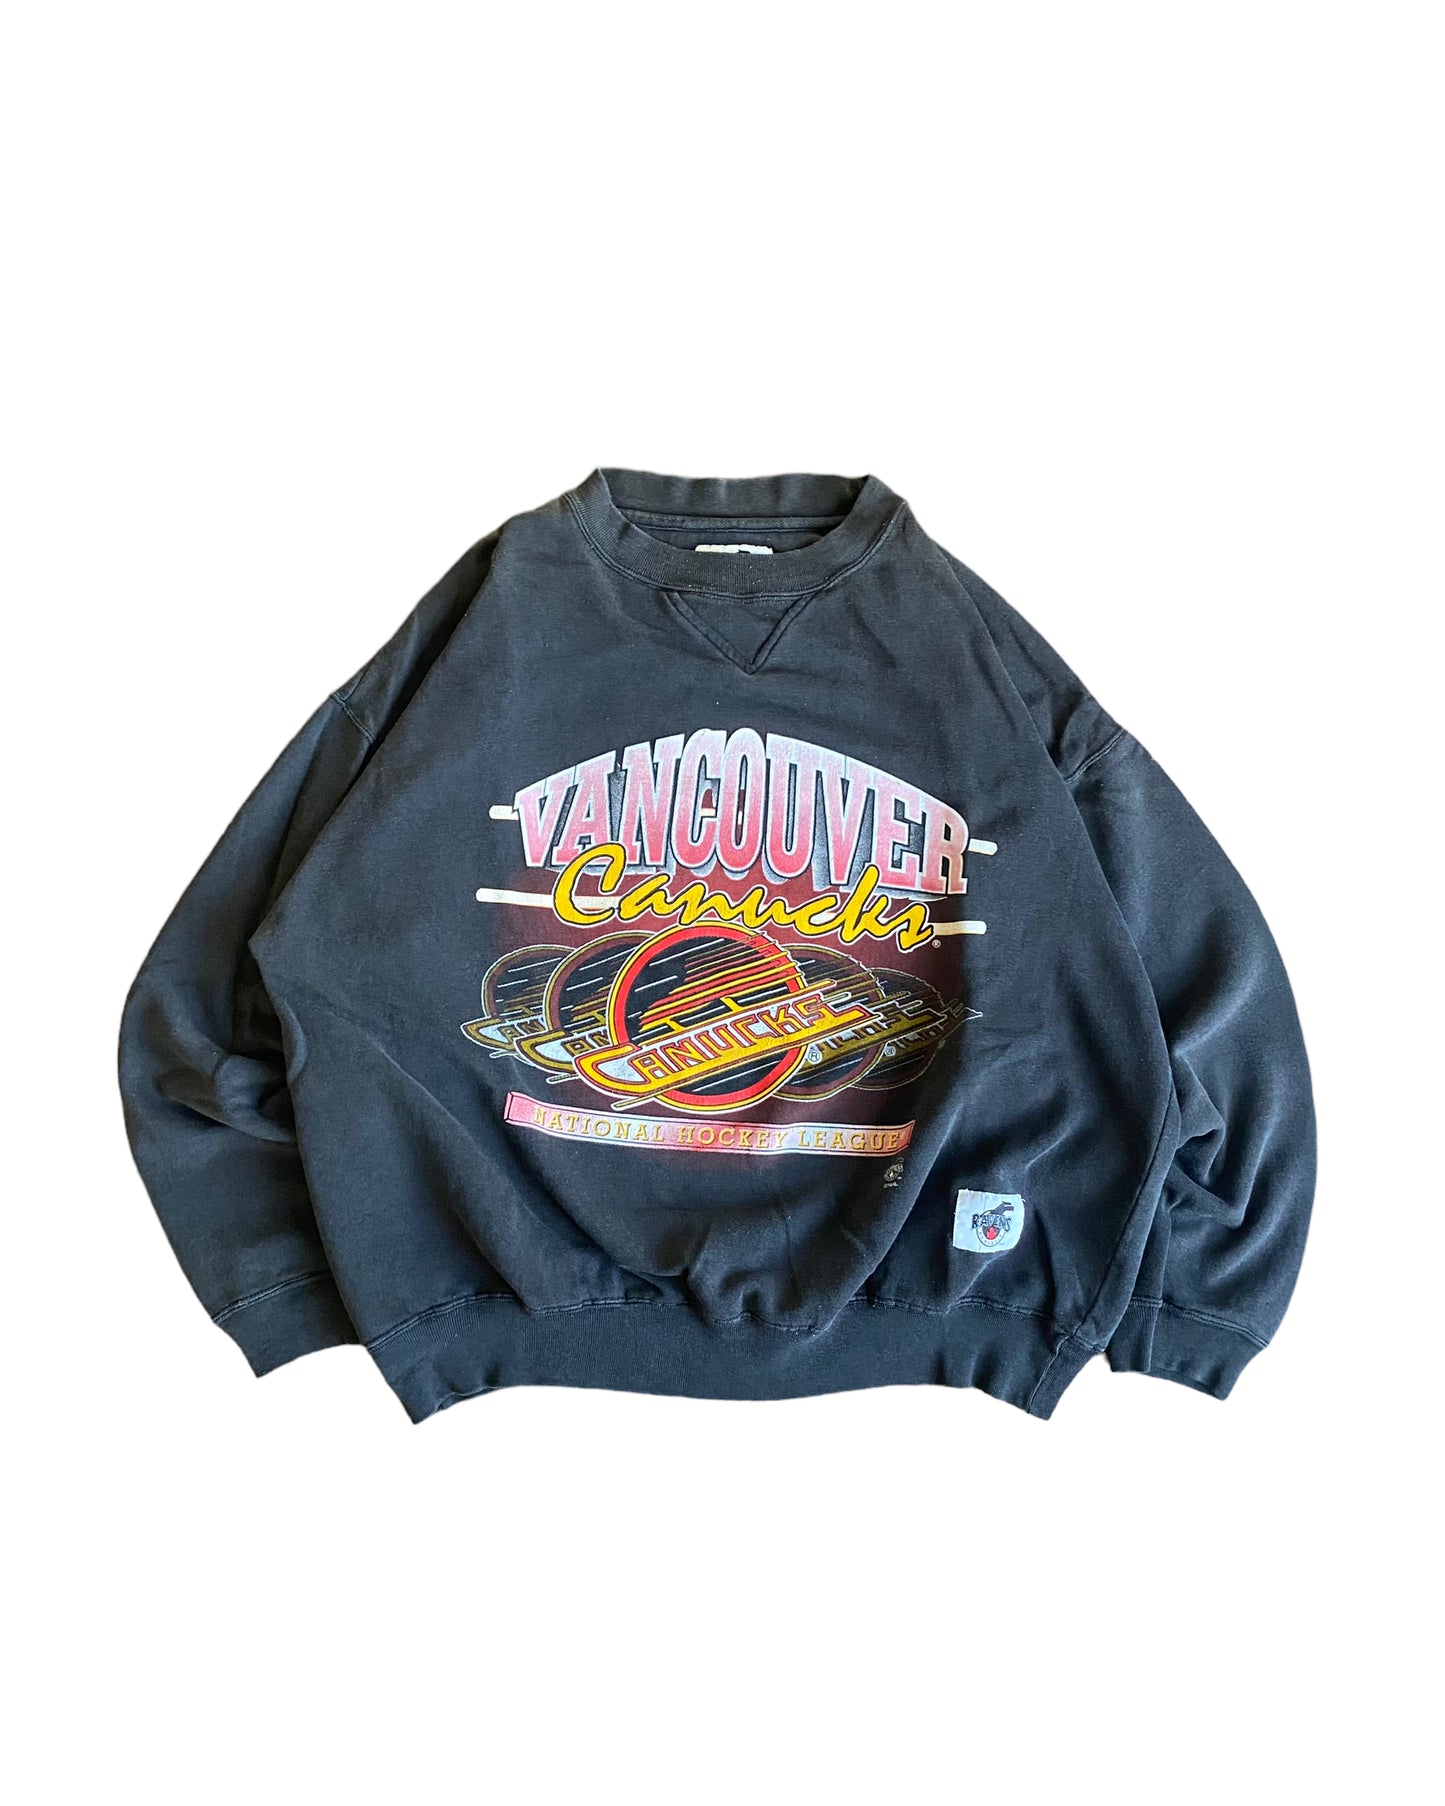 80's Canucks Sweatshirt (XL)